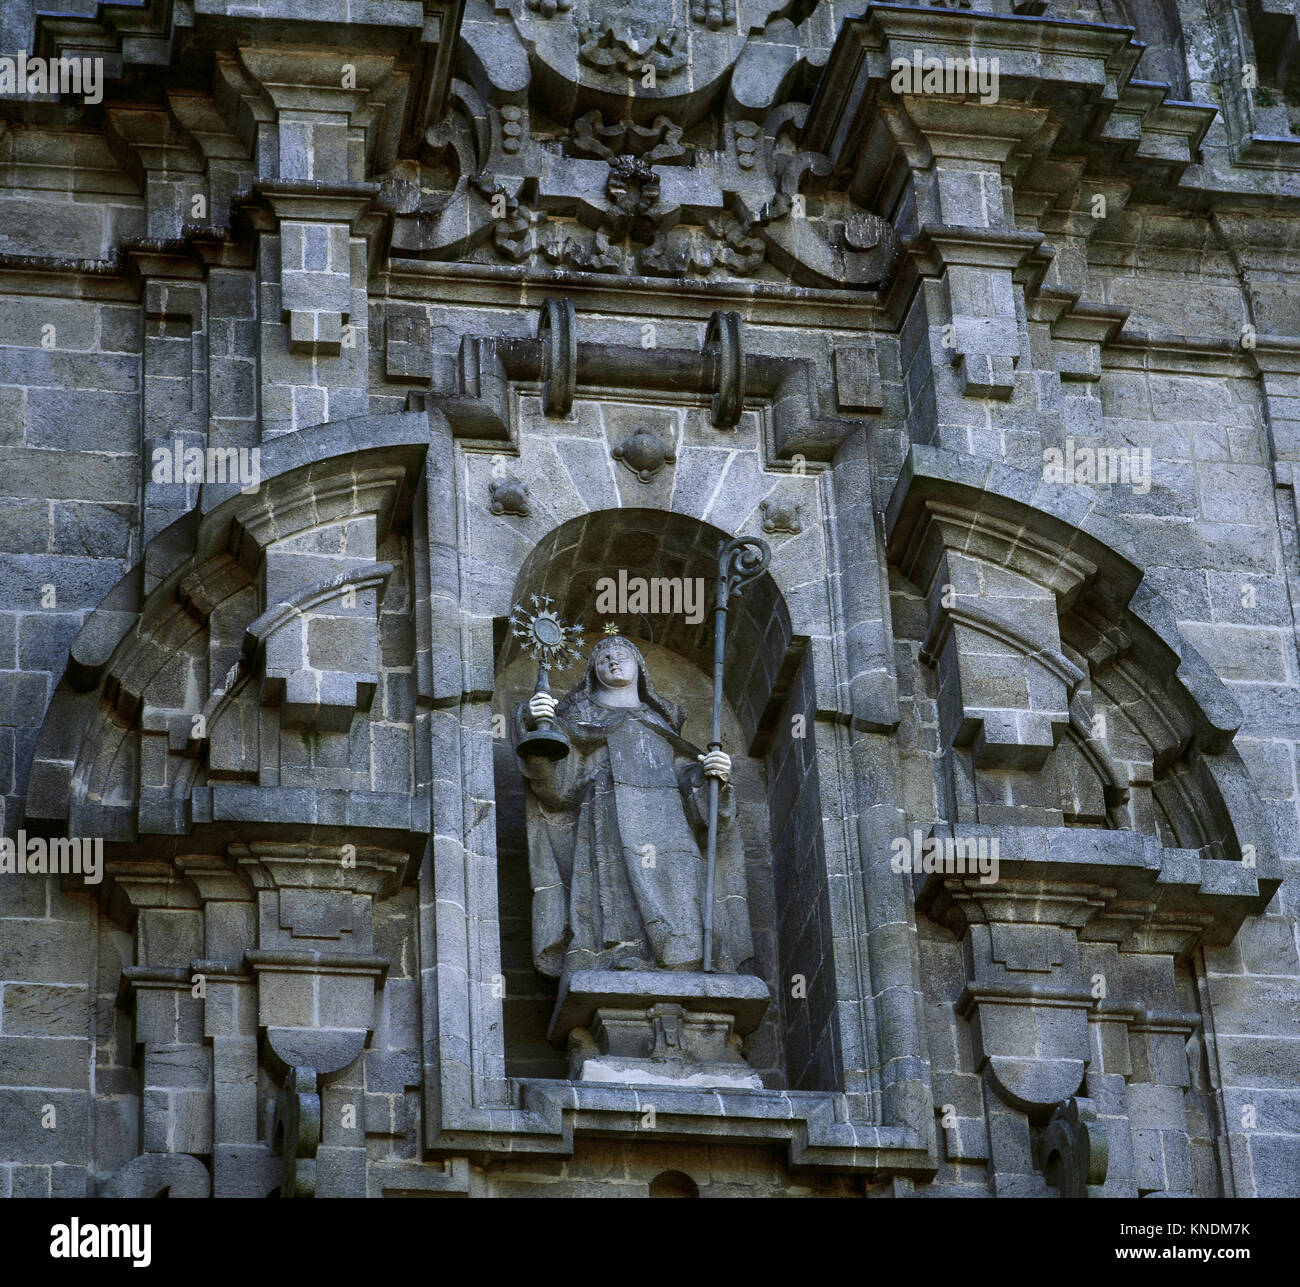 Statue of Clare of Assisi (1194-1253). Italian saint. Baroque facade of da Igrexa, by Simon Rodriguez, 1719. Convent of Saint Clare. Santiago de Compostela. Galicia, Spain. Stock Photo